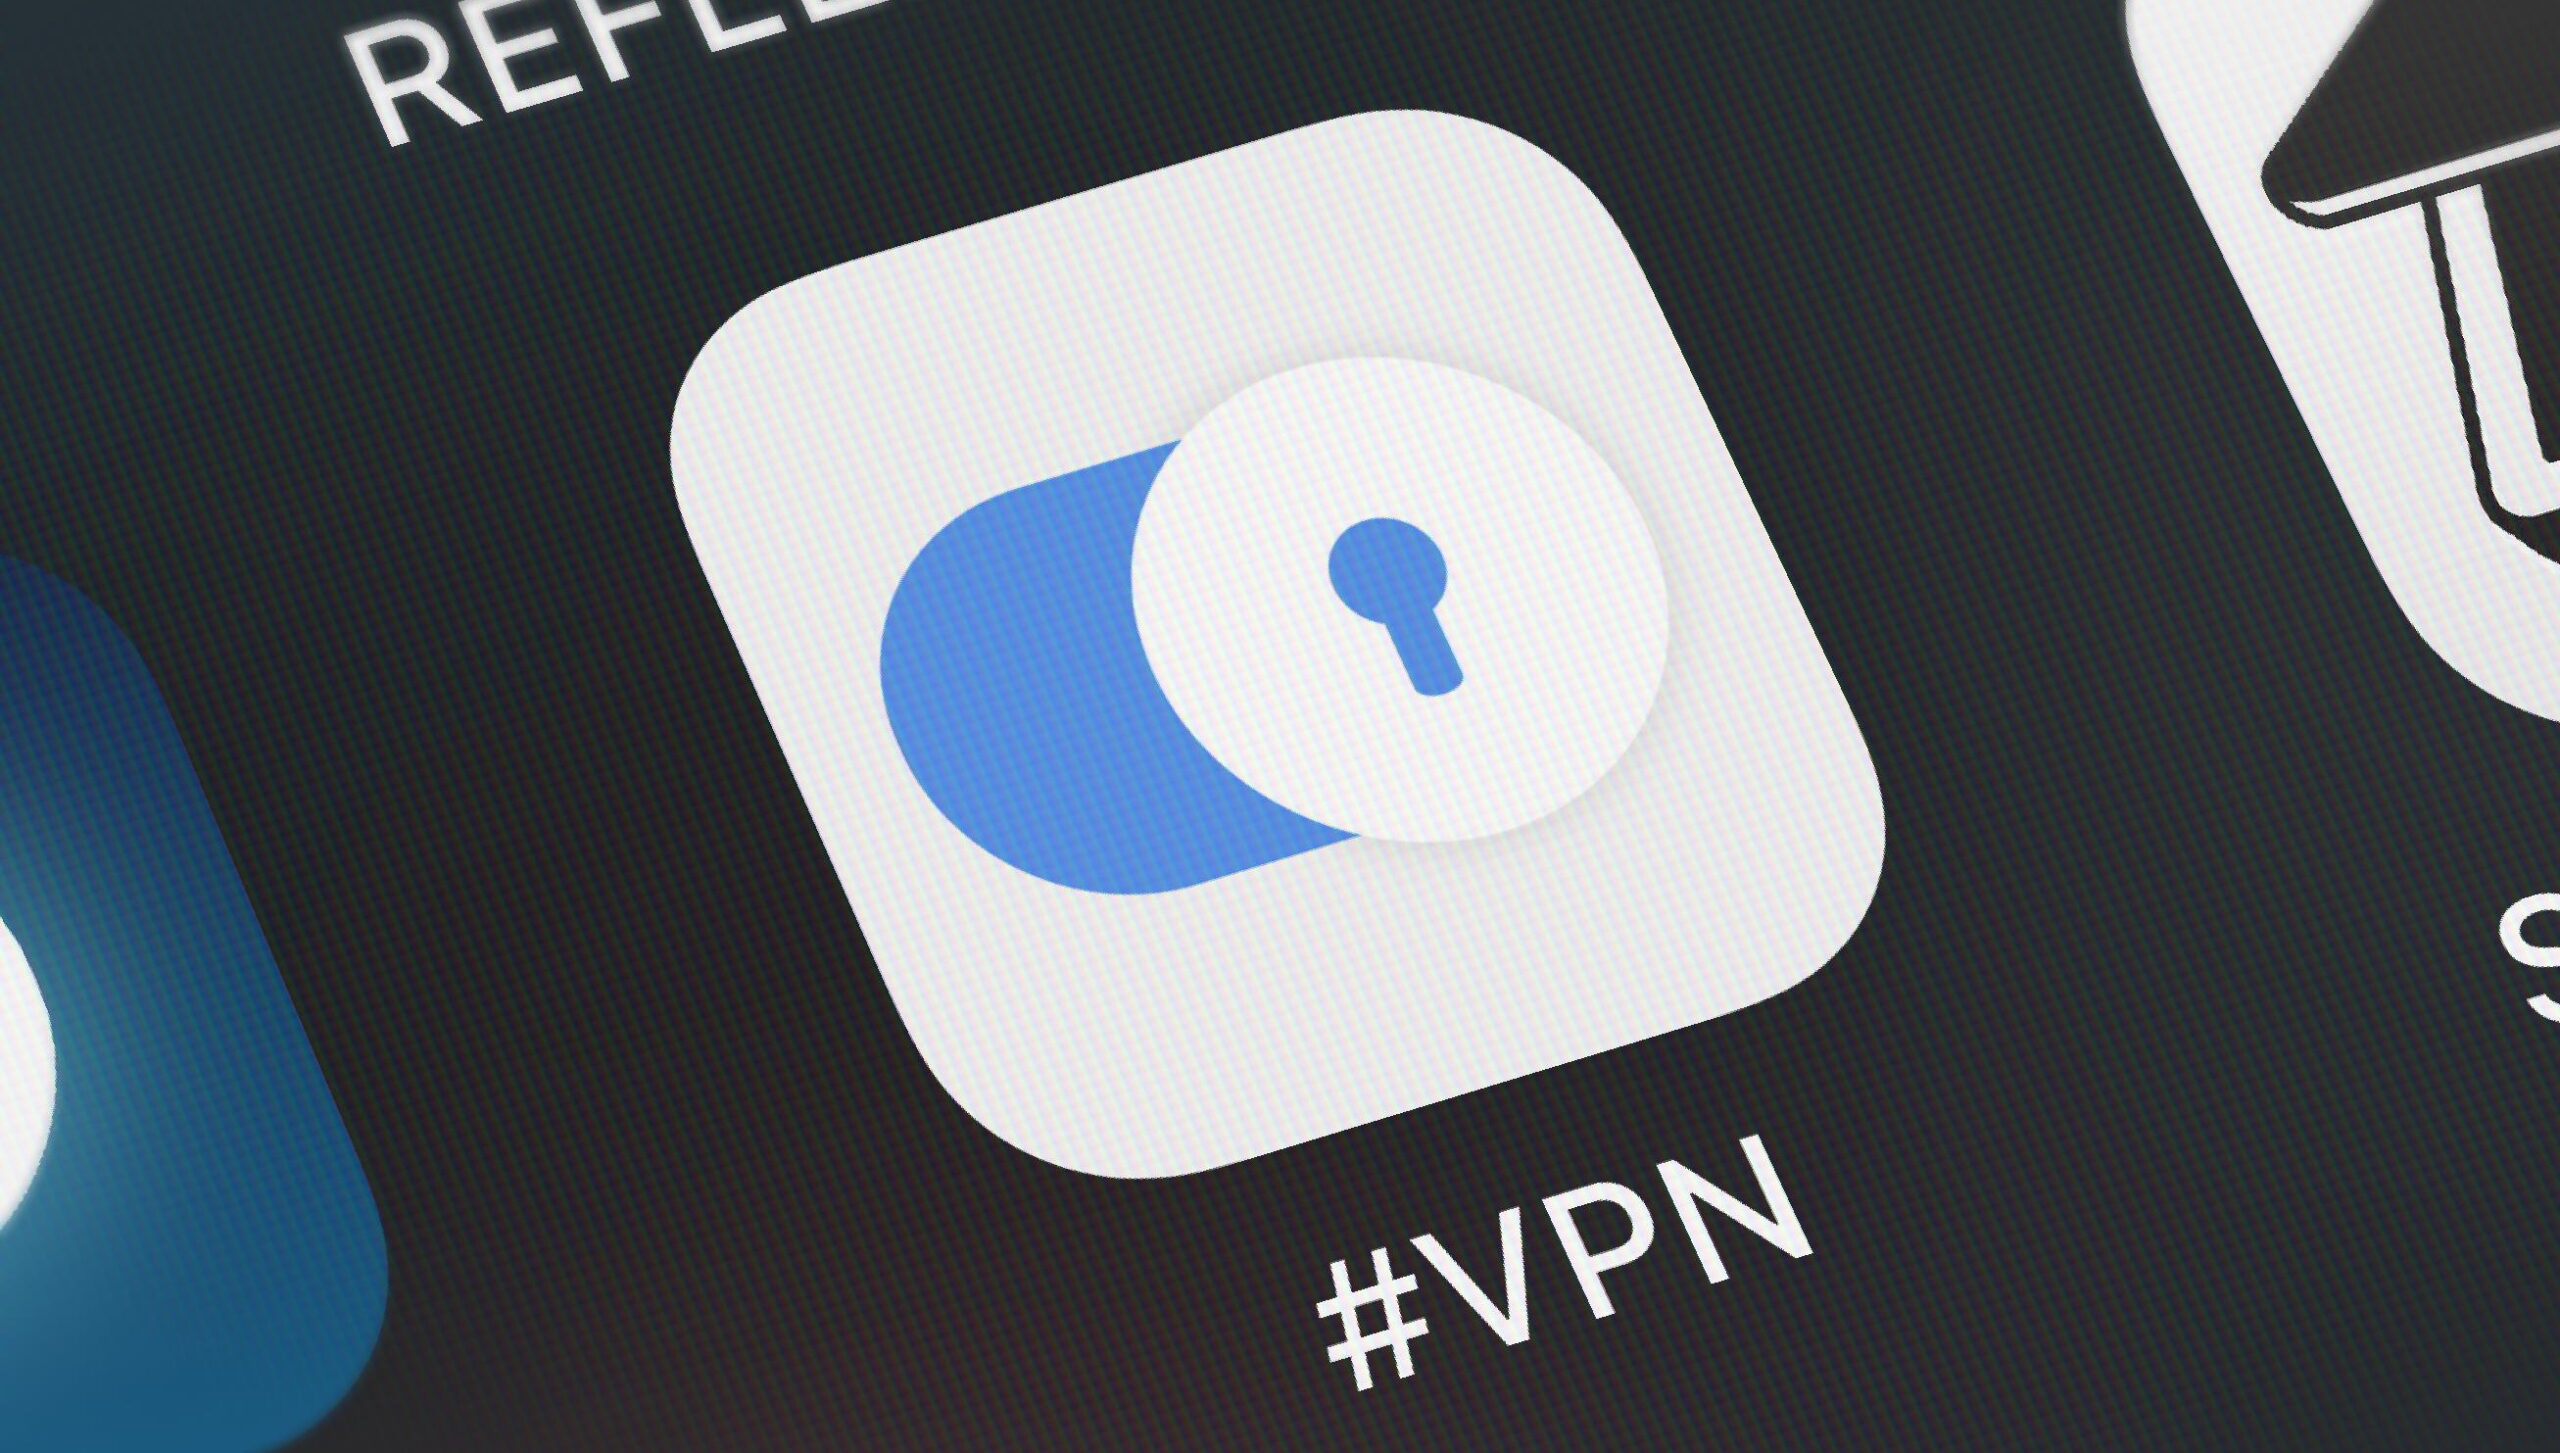 Best VPN for iphone 